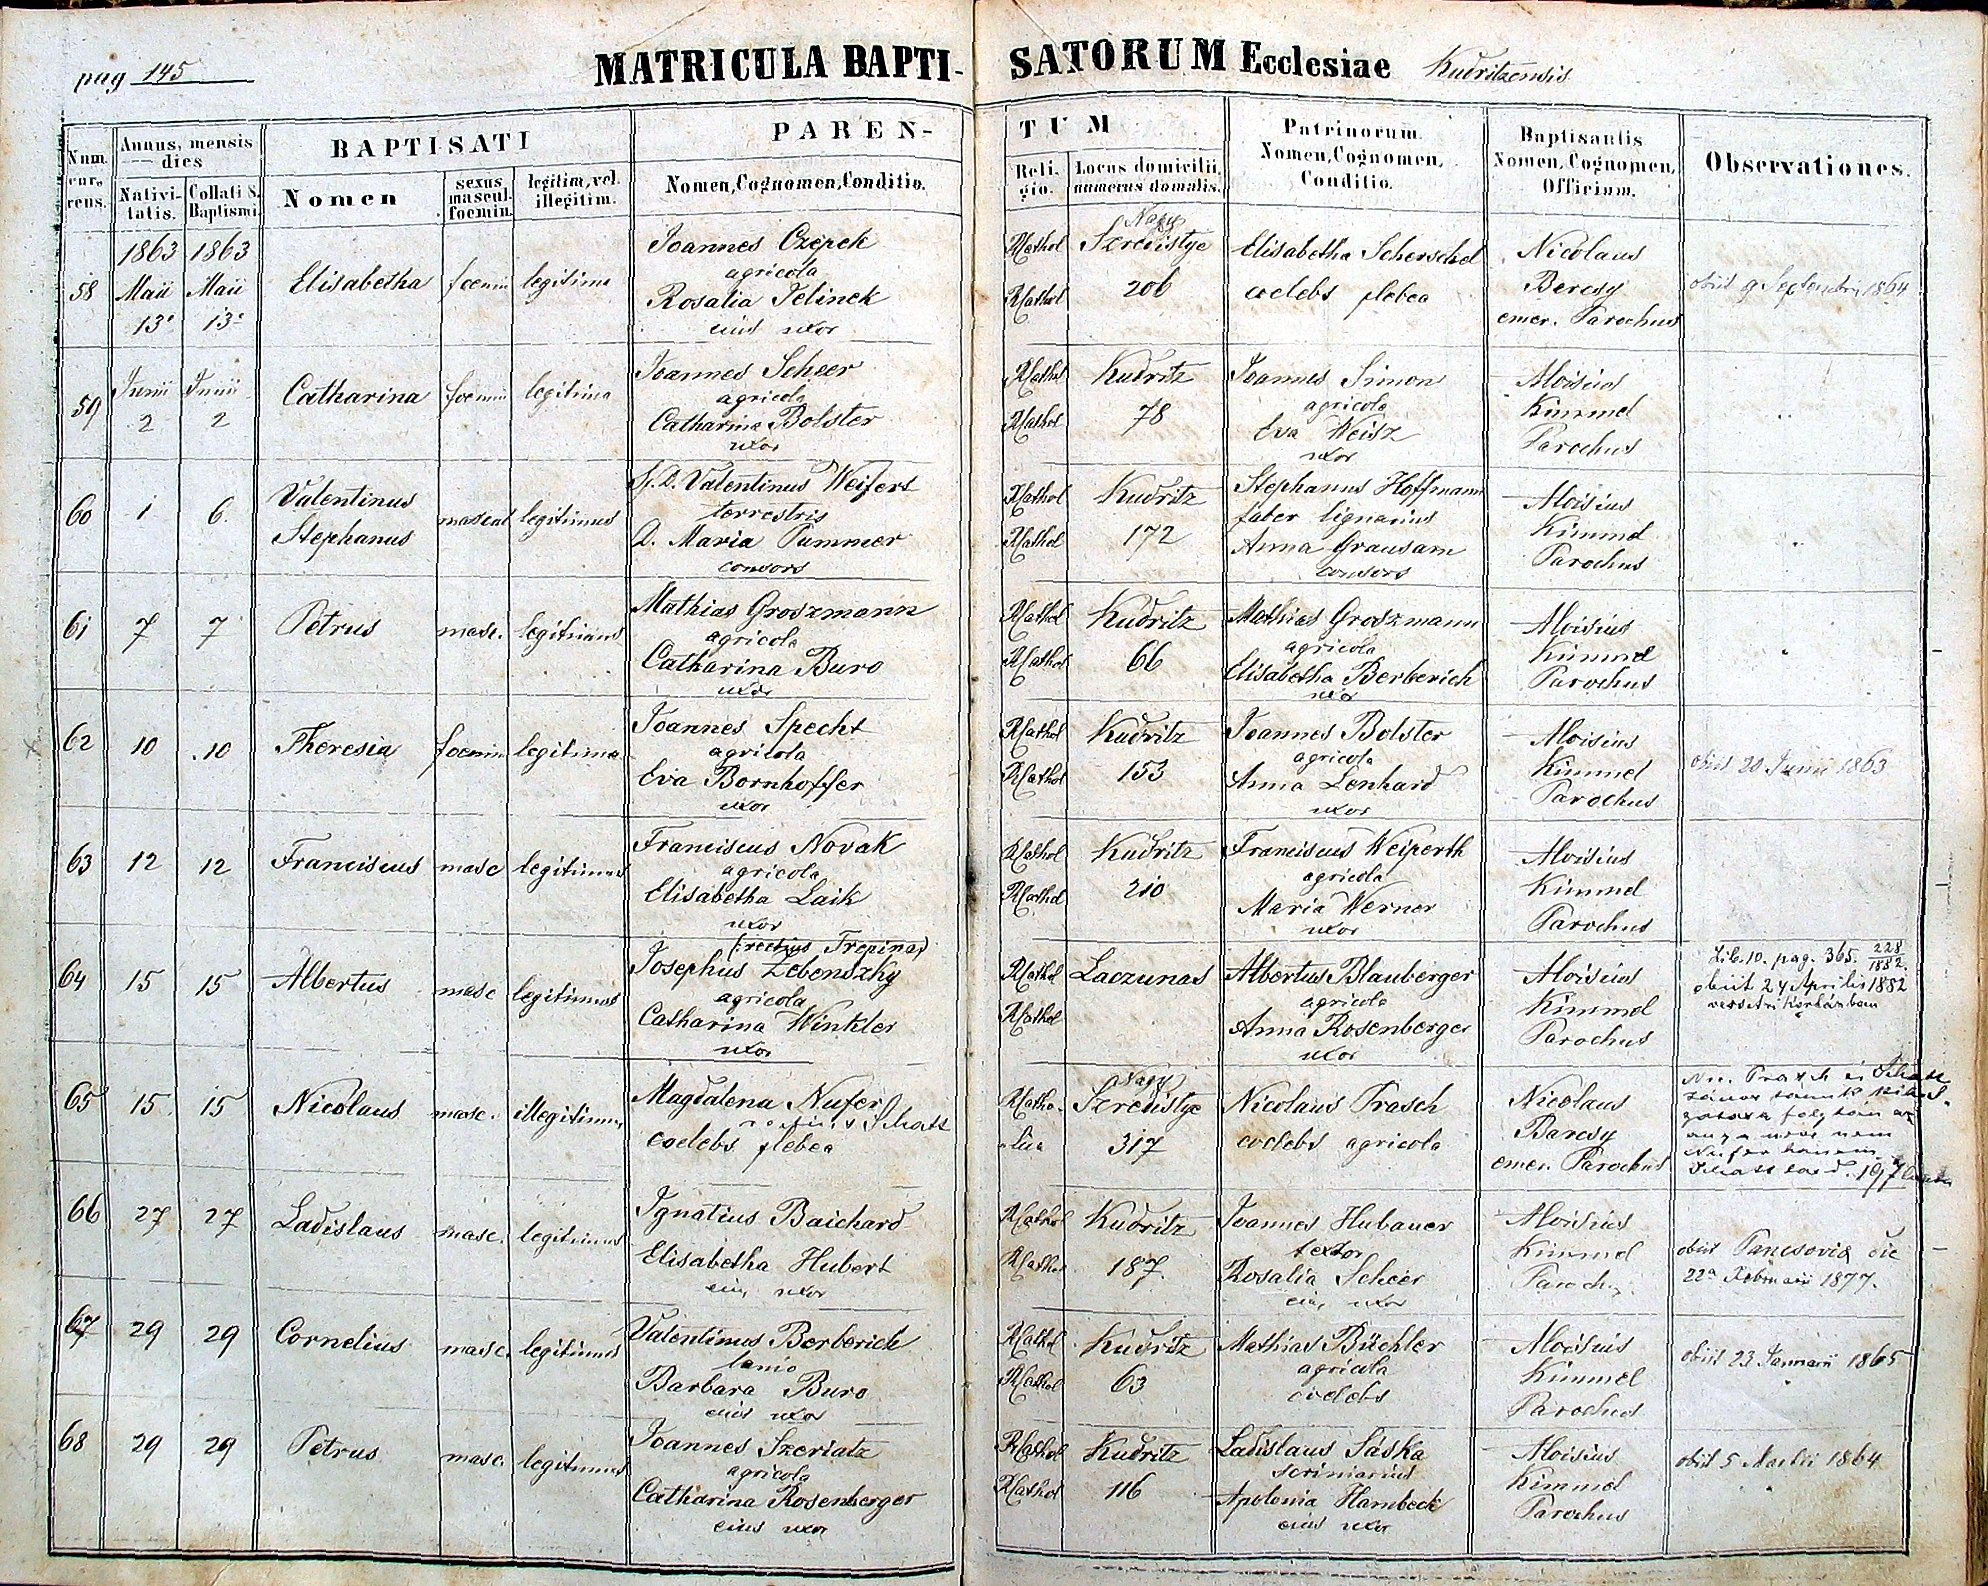 images/church_records/BIRTHS/1852-1870B/145